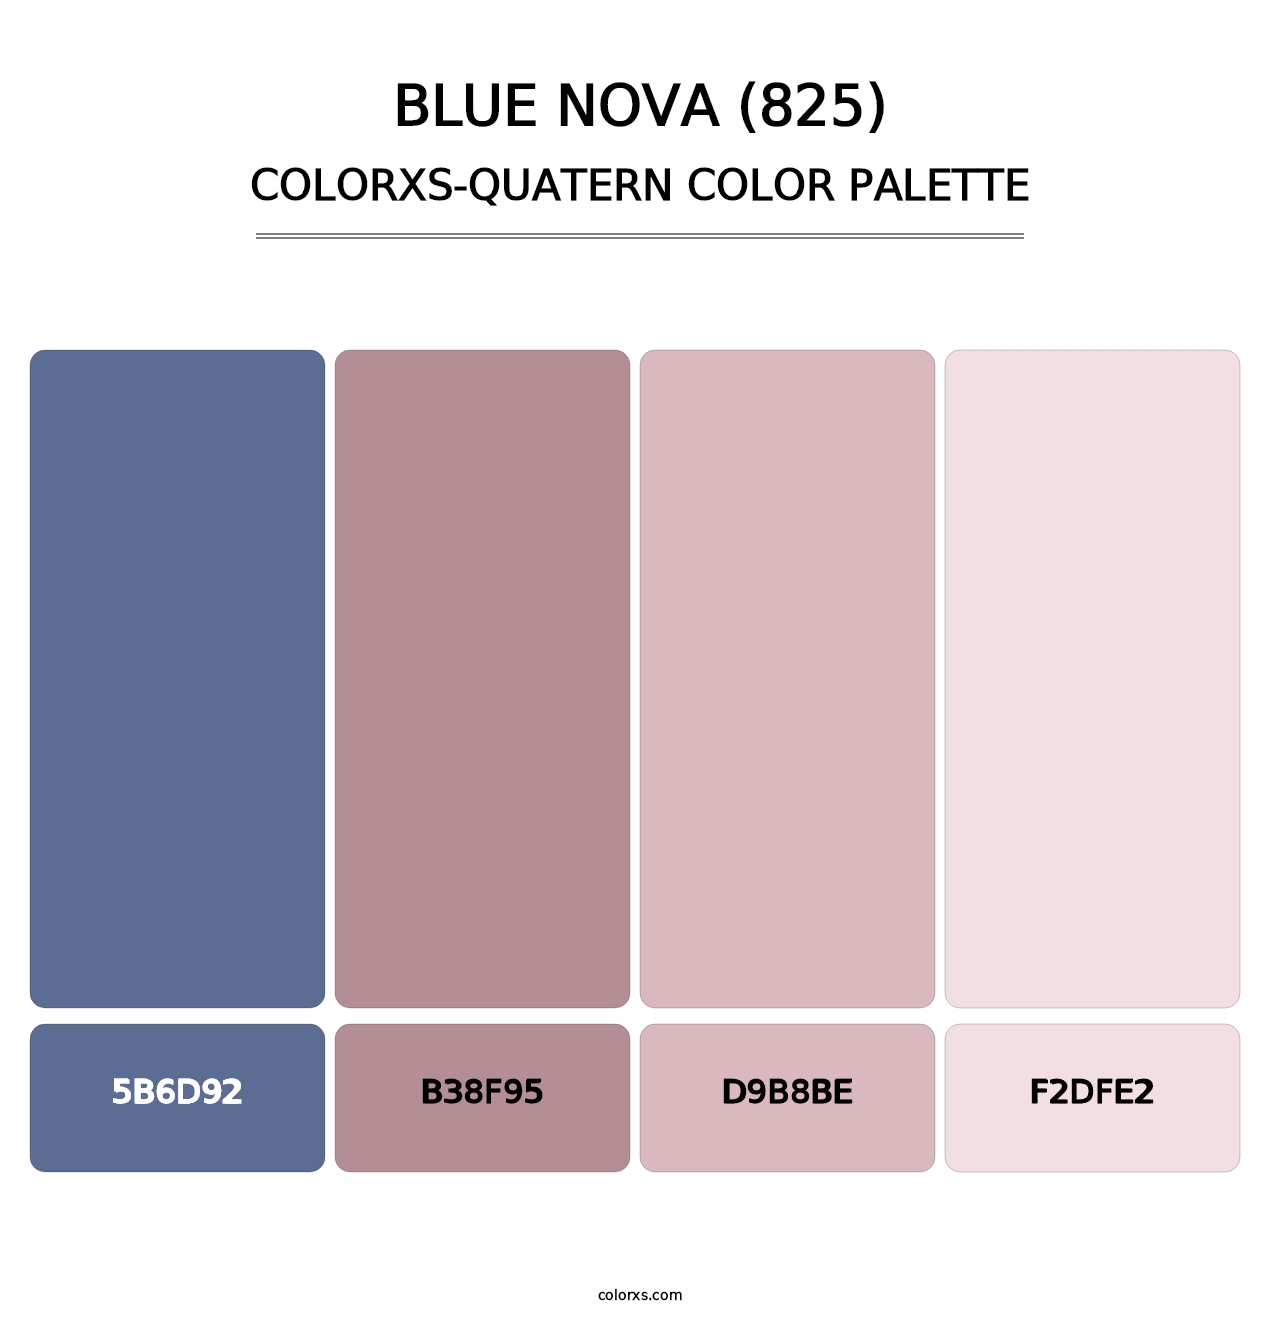 Blue Nova (825) - Colorxs Quatern Palette